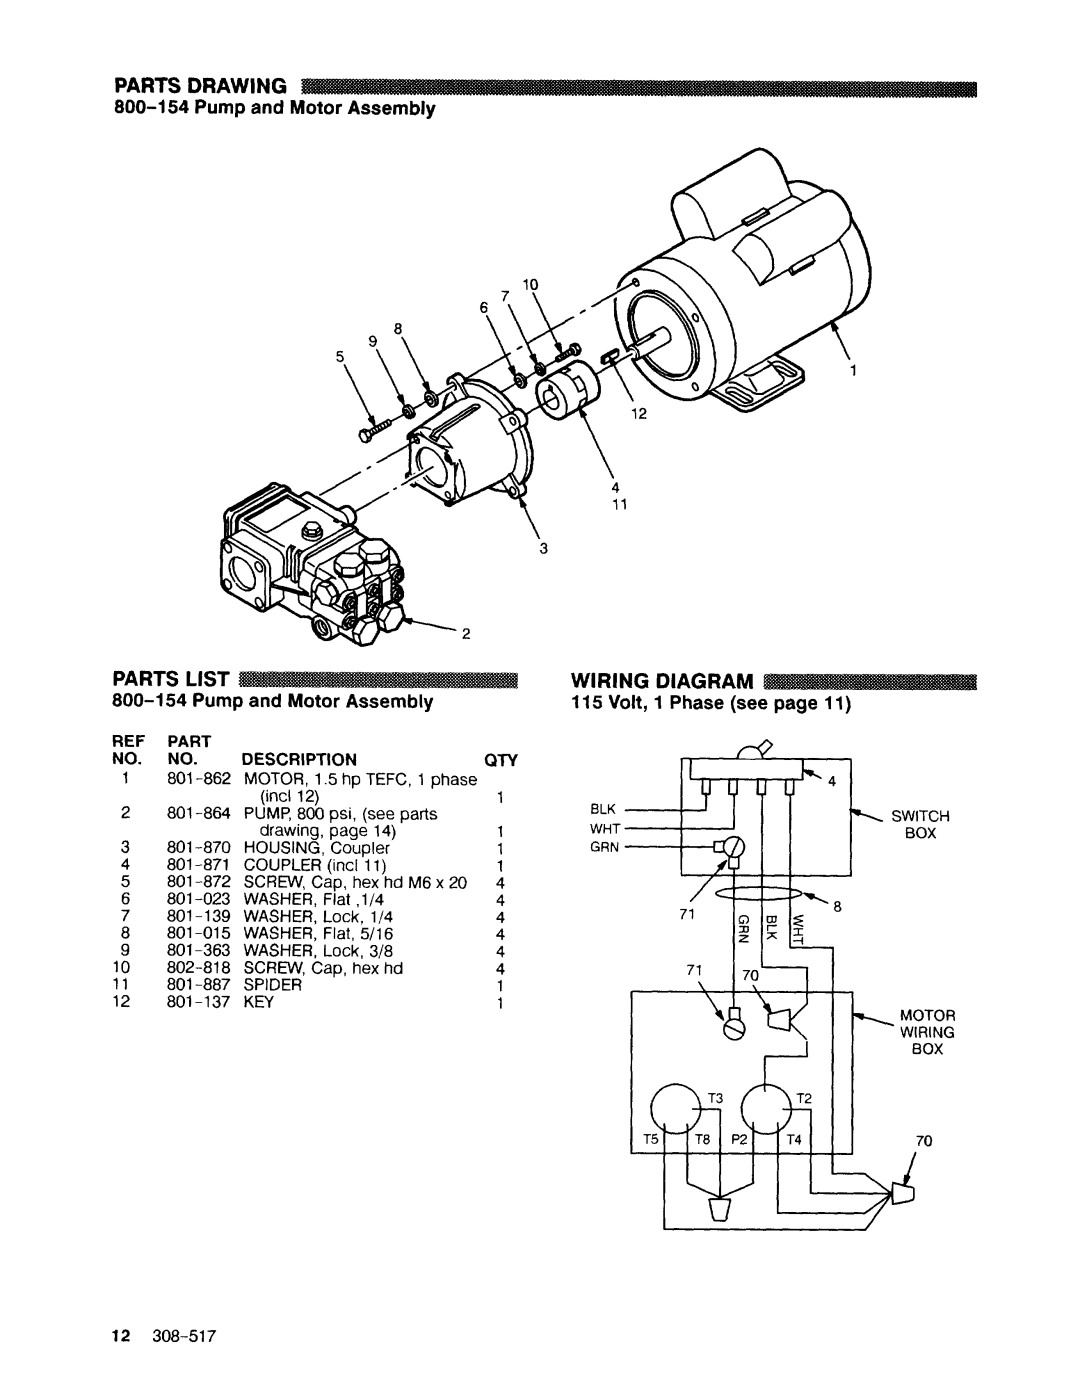 Graco Inc 308-517 Wiring Diagram, 800-l54 Pump and Motor Assembly, 800-154Pump and Motor Assembly, Volt, 1 Phase see page 